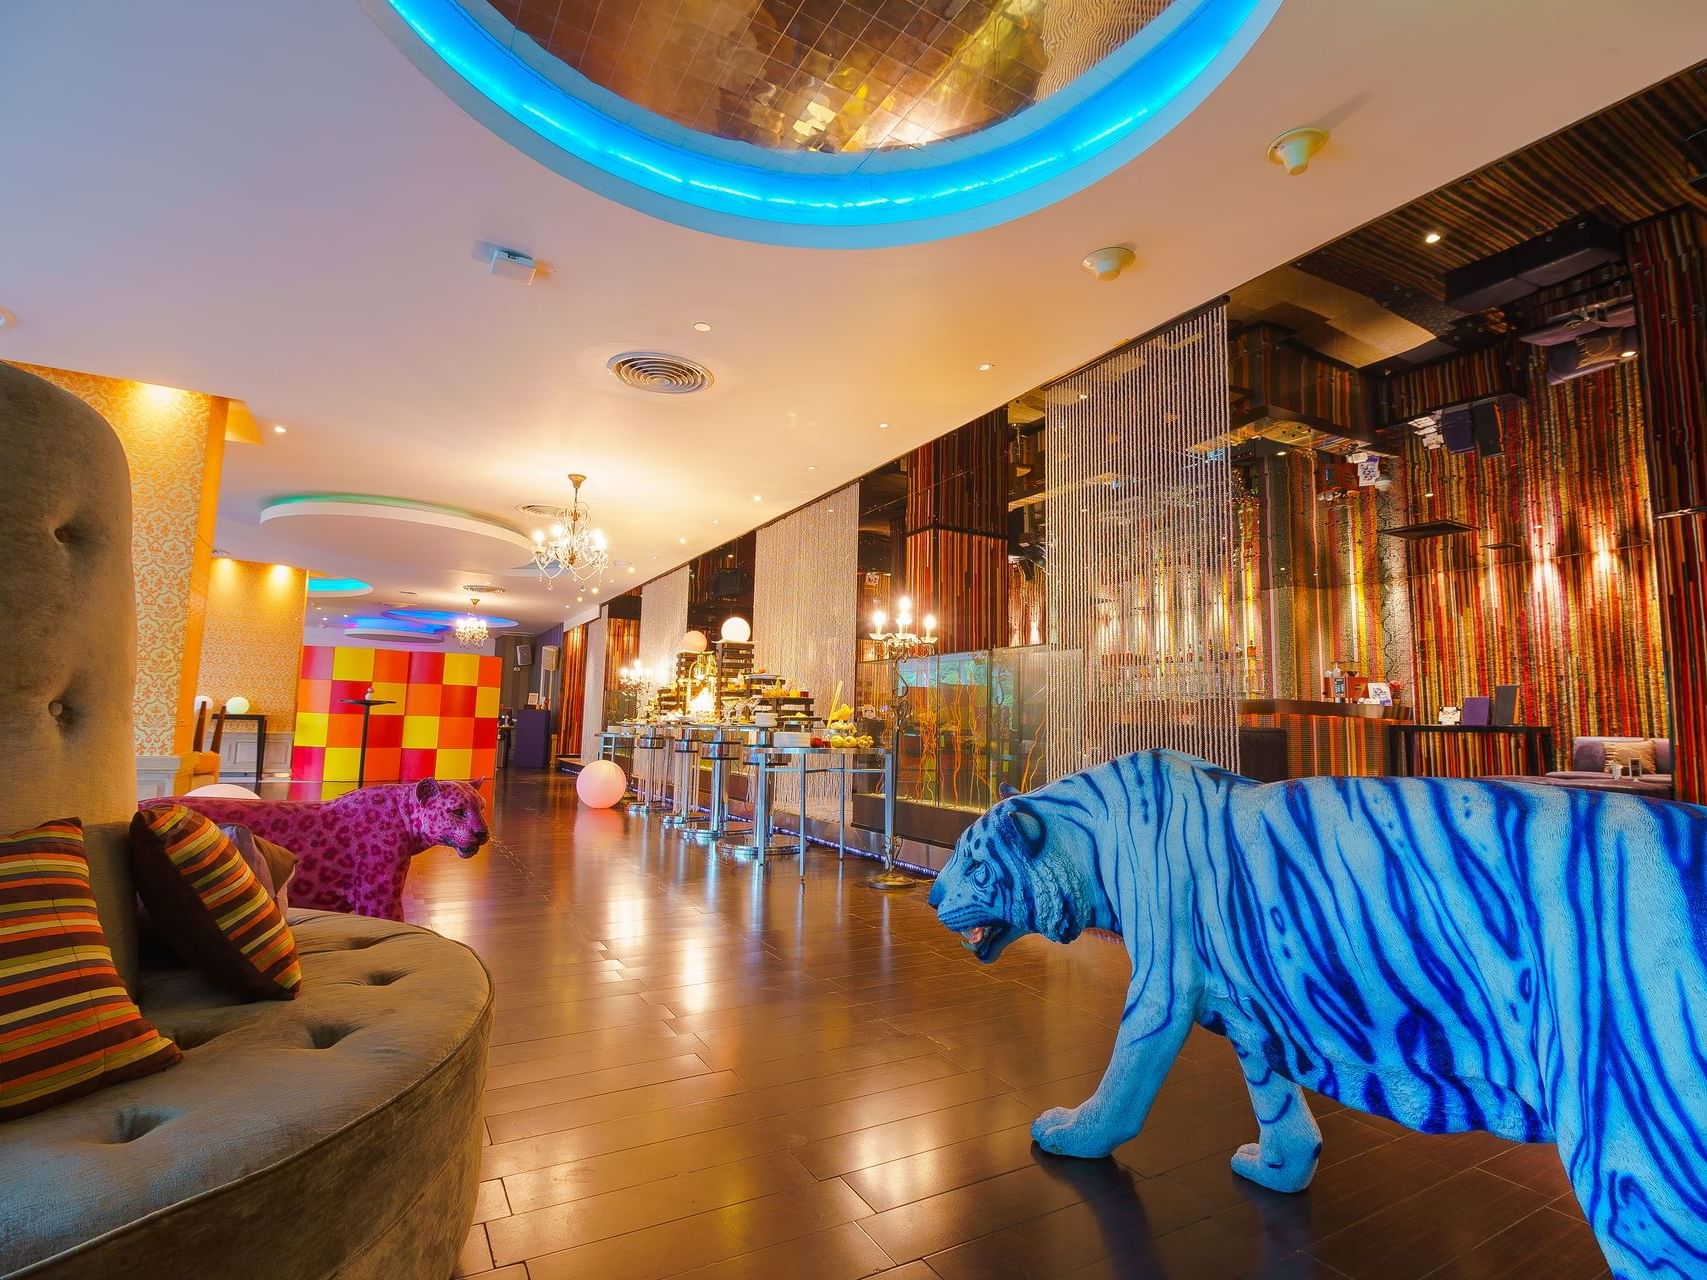 Tow tiger statue in flava venues meeting room at Dream Bangkok 